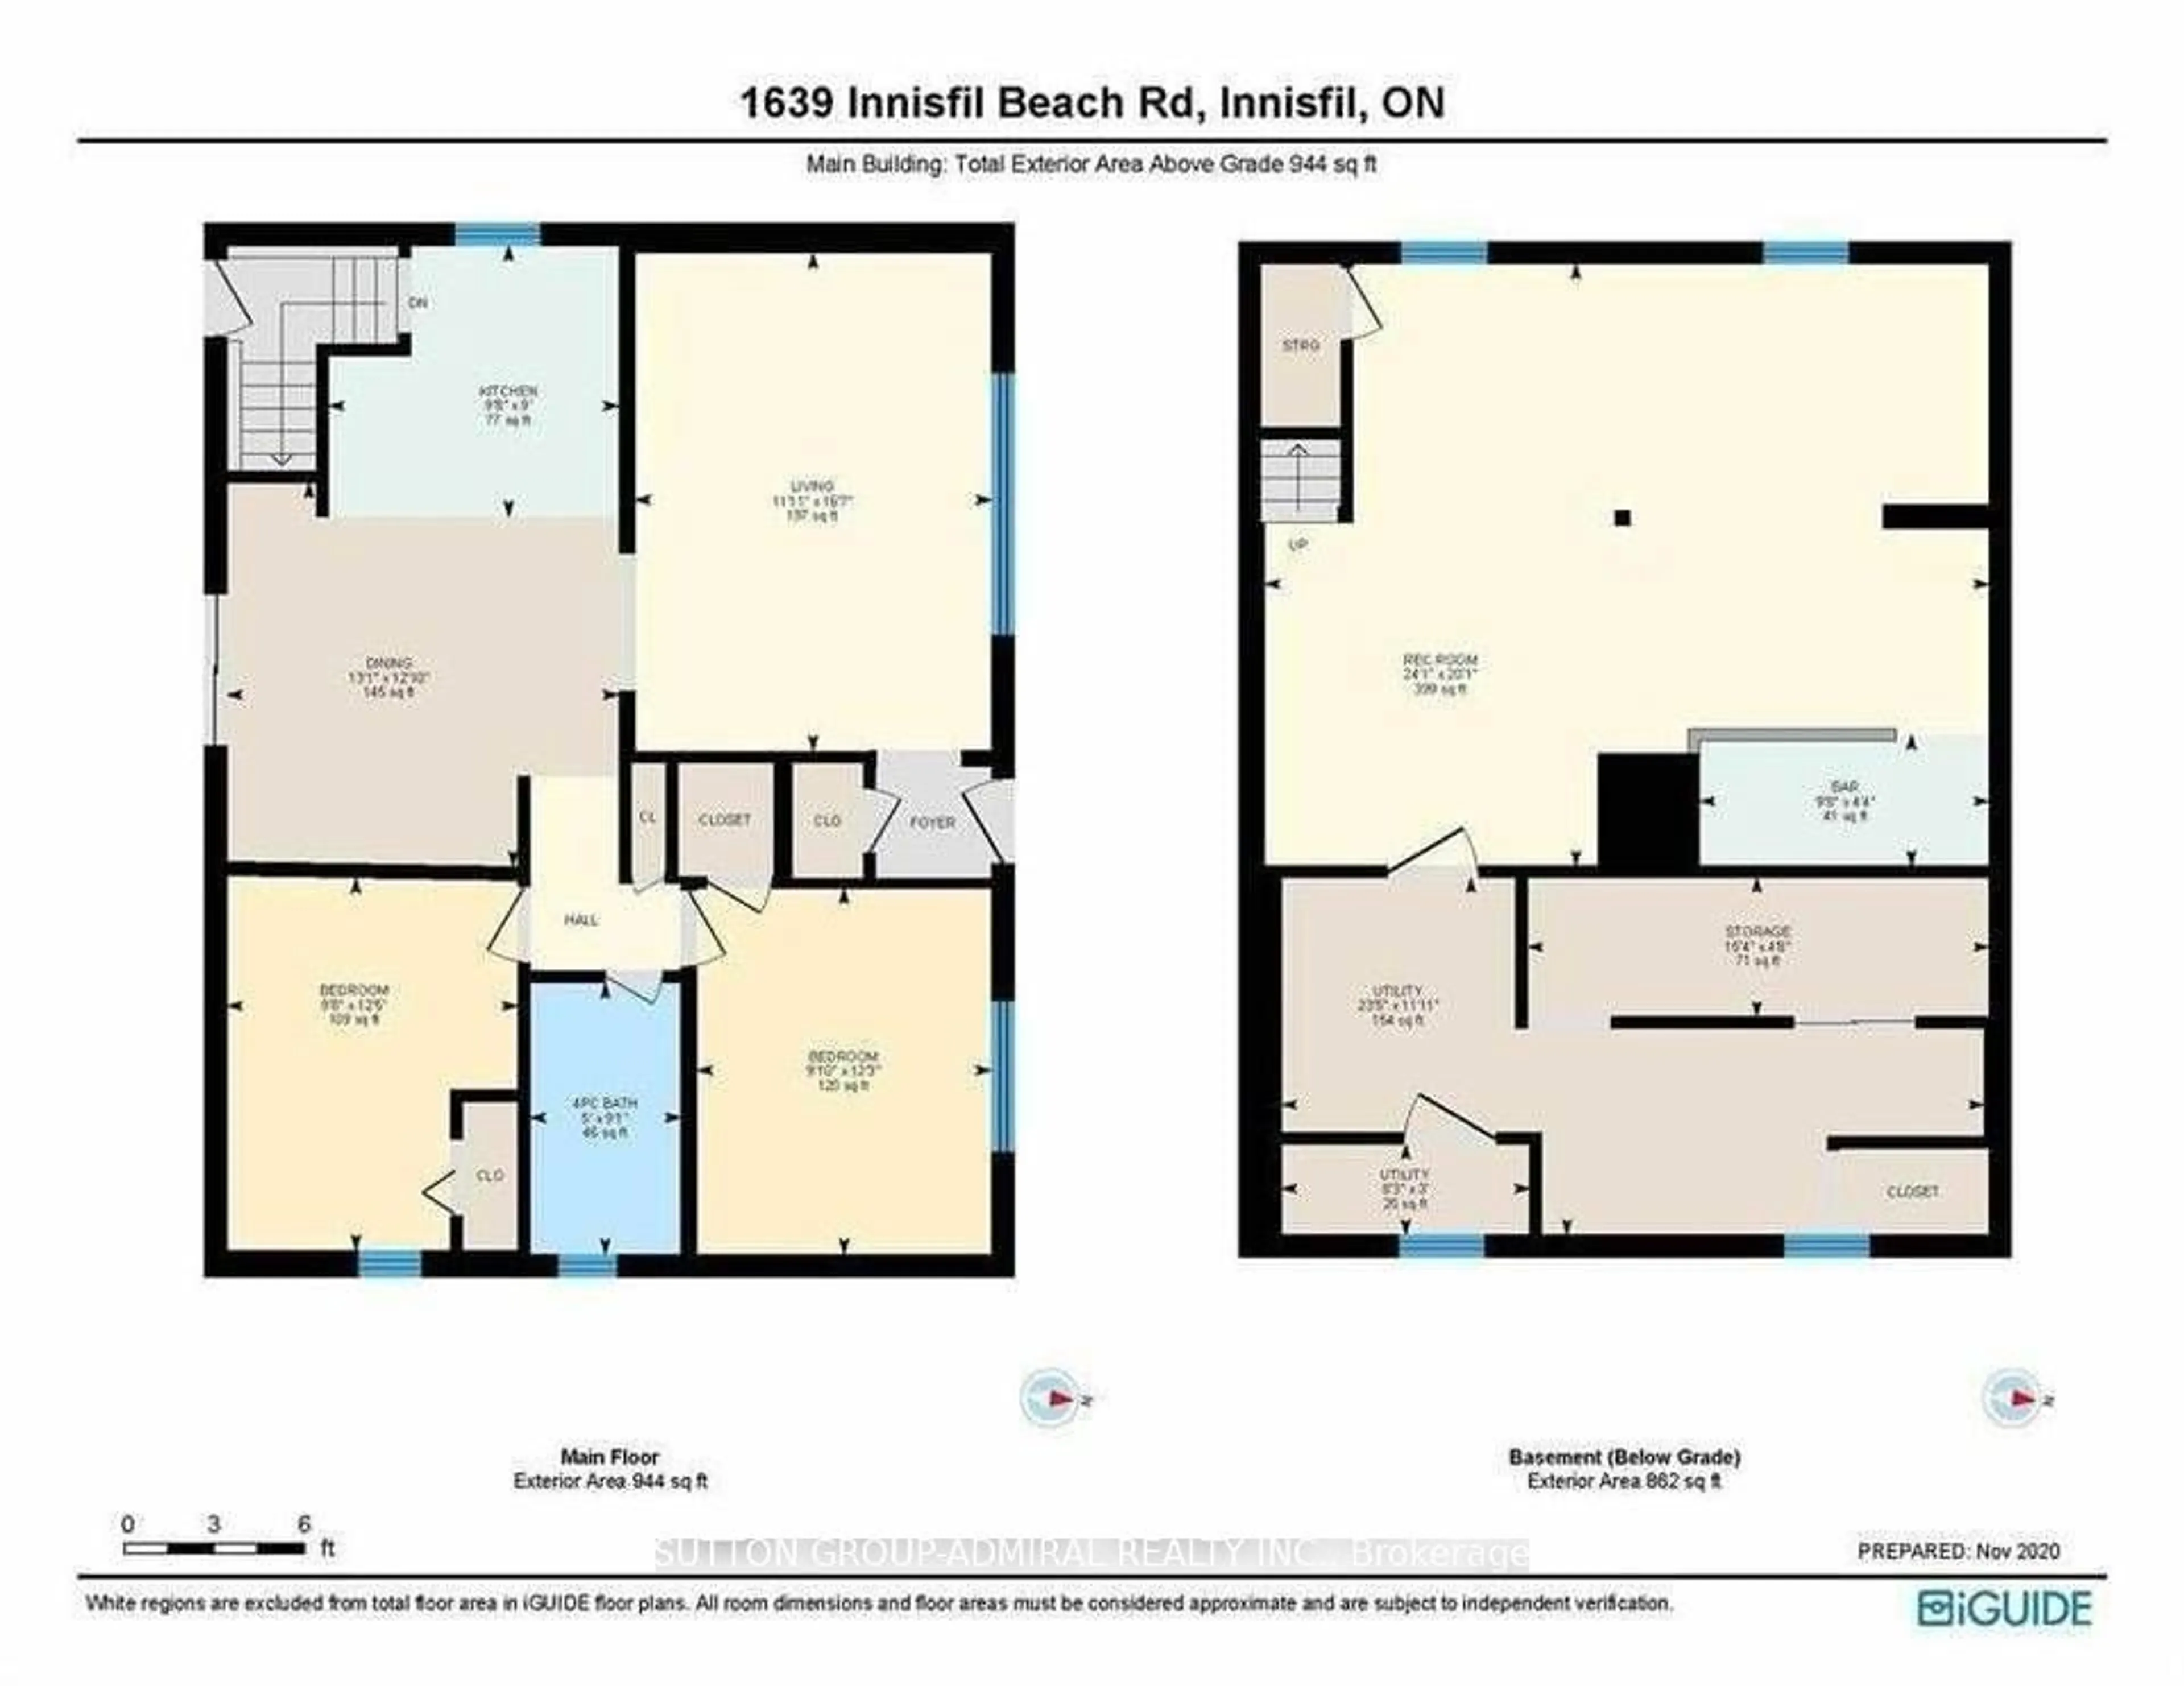 Floor plan for 1639 Innisfil Beach Rd, Innisfil Ontario L9S 4B3